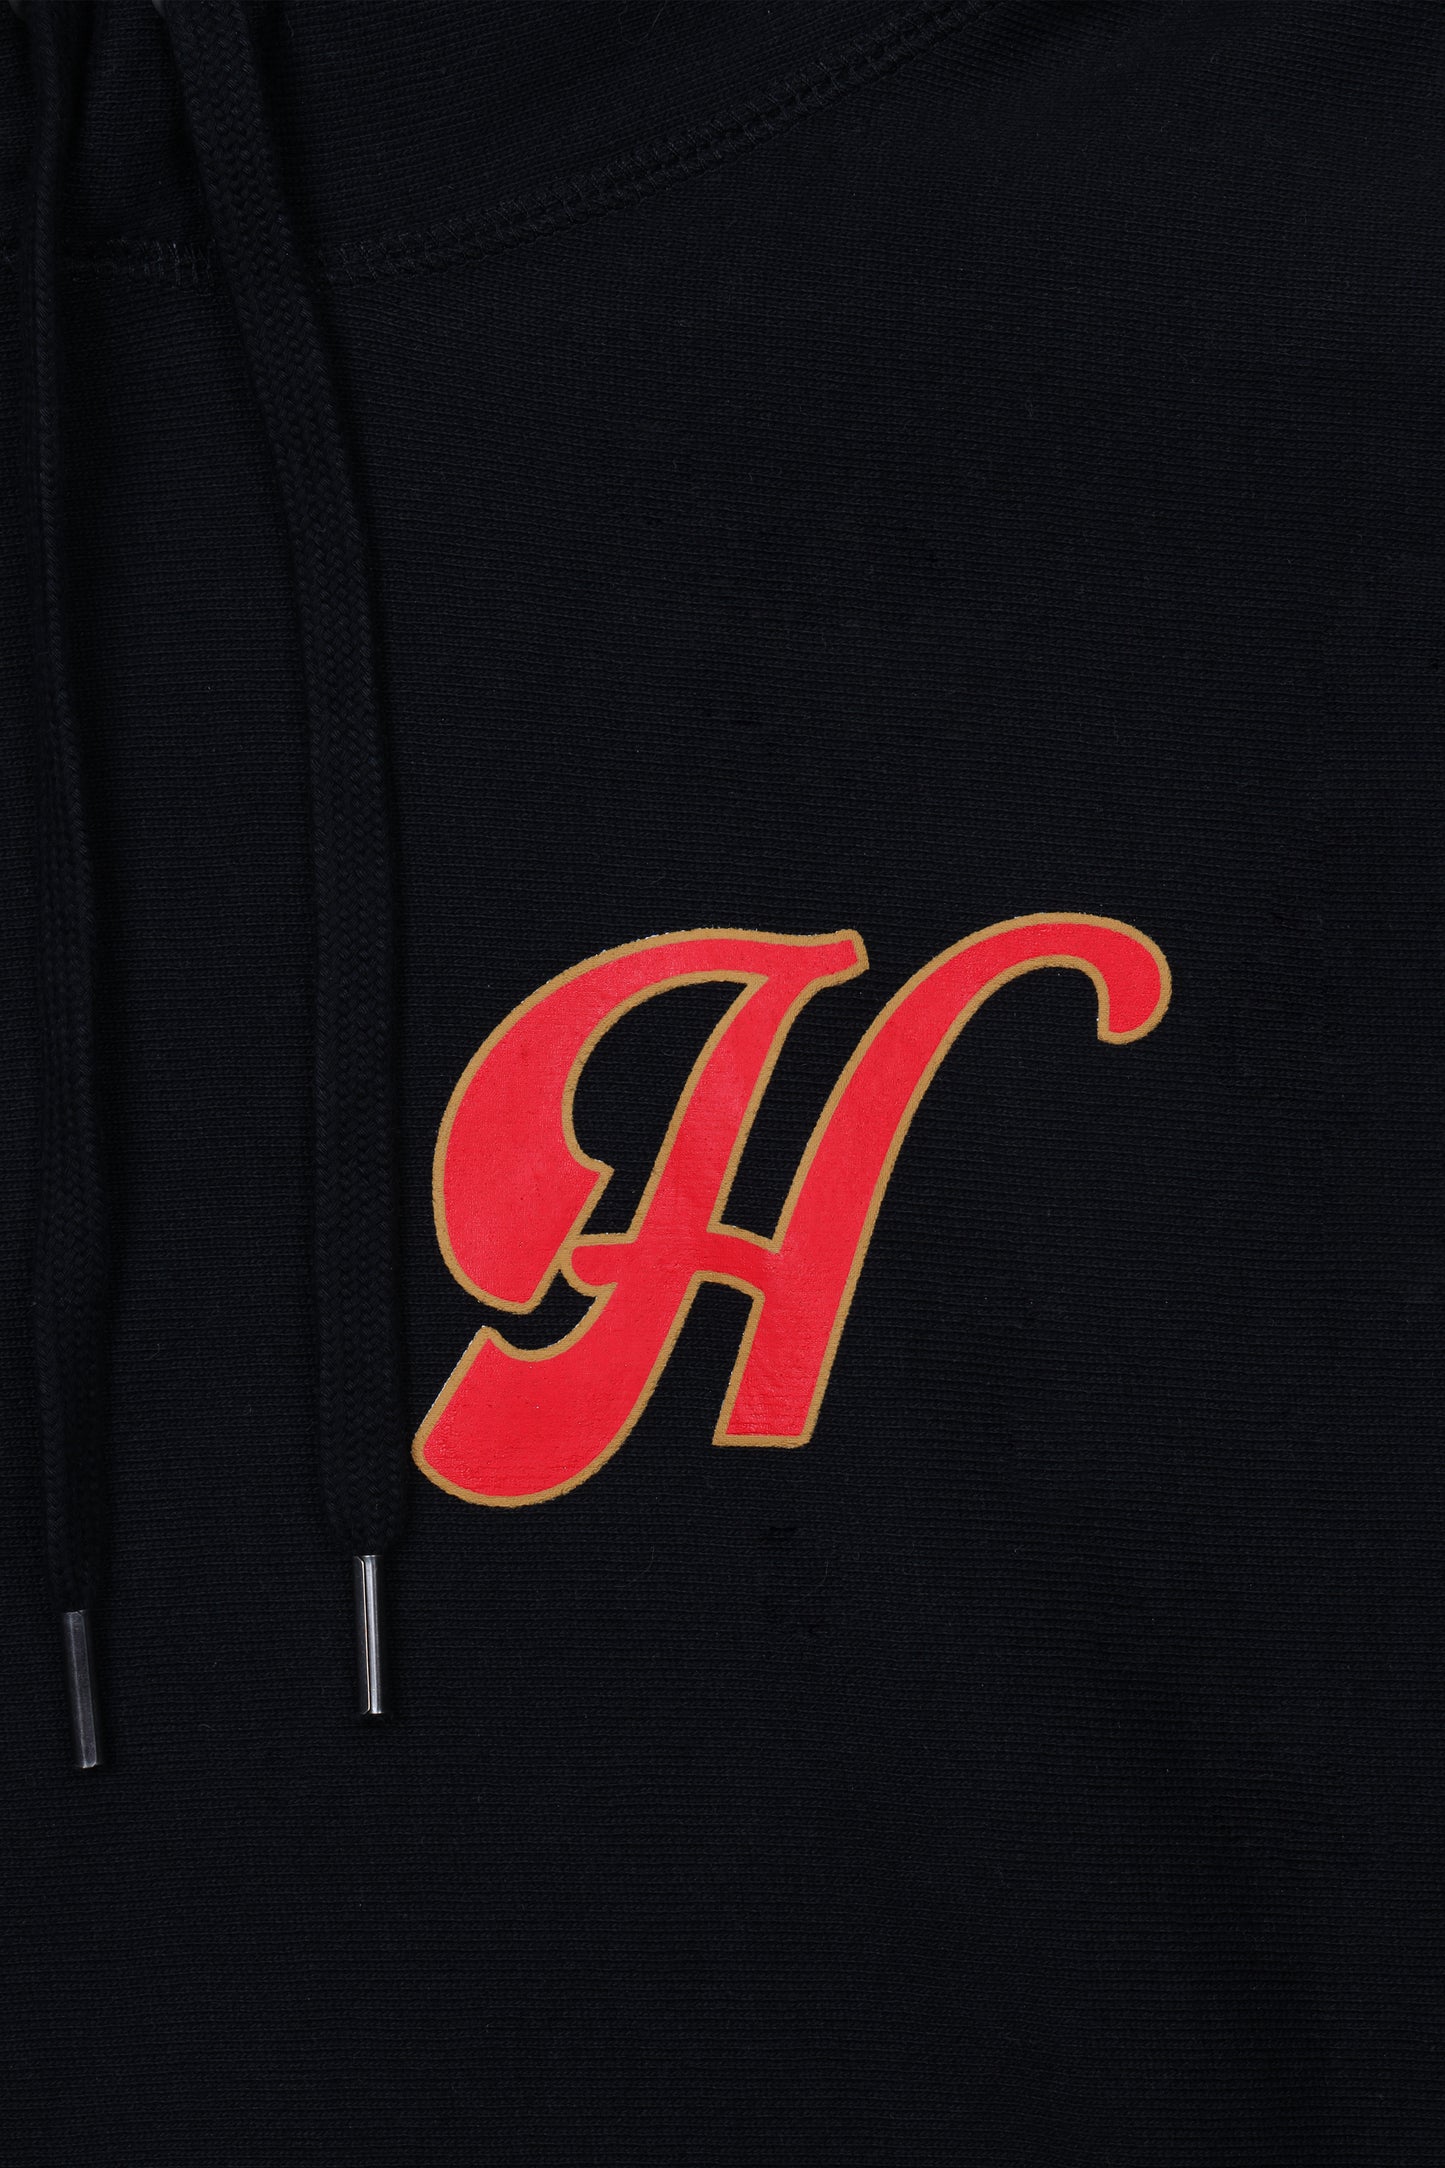 sol hoodie sweatshirt black H logo close up